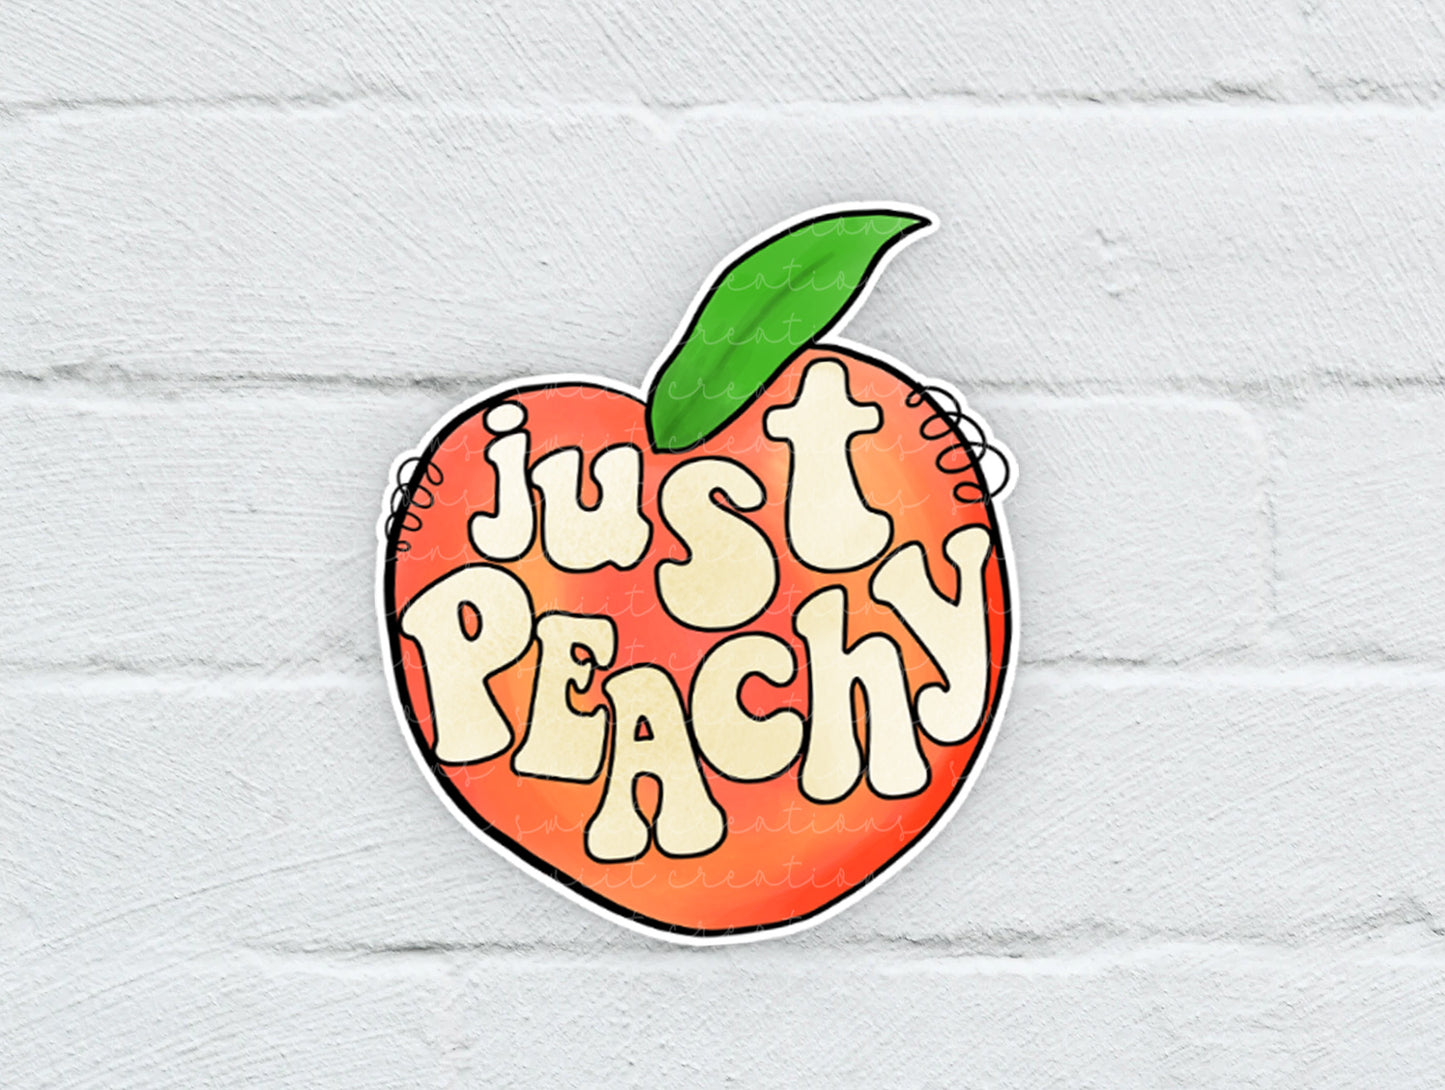 Just Peachy Waterproof Sticker (SS810)